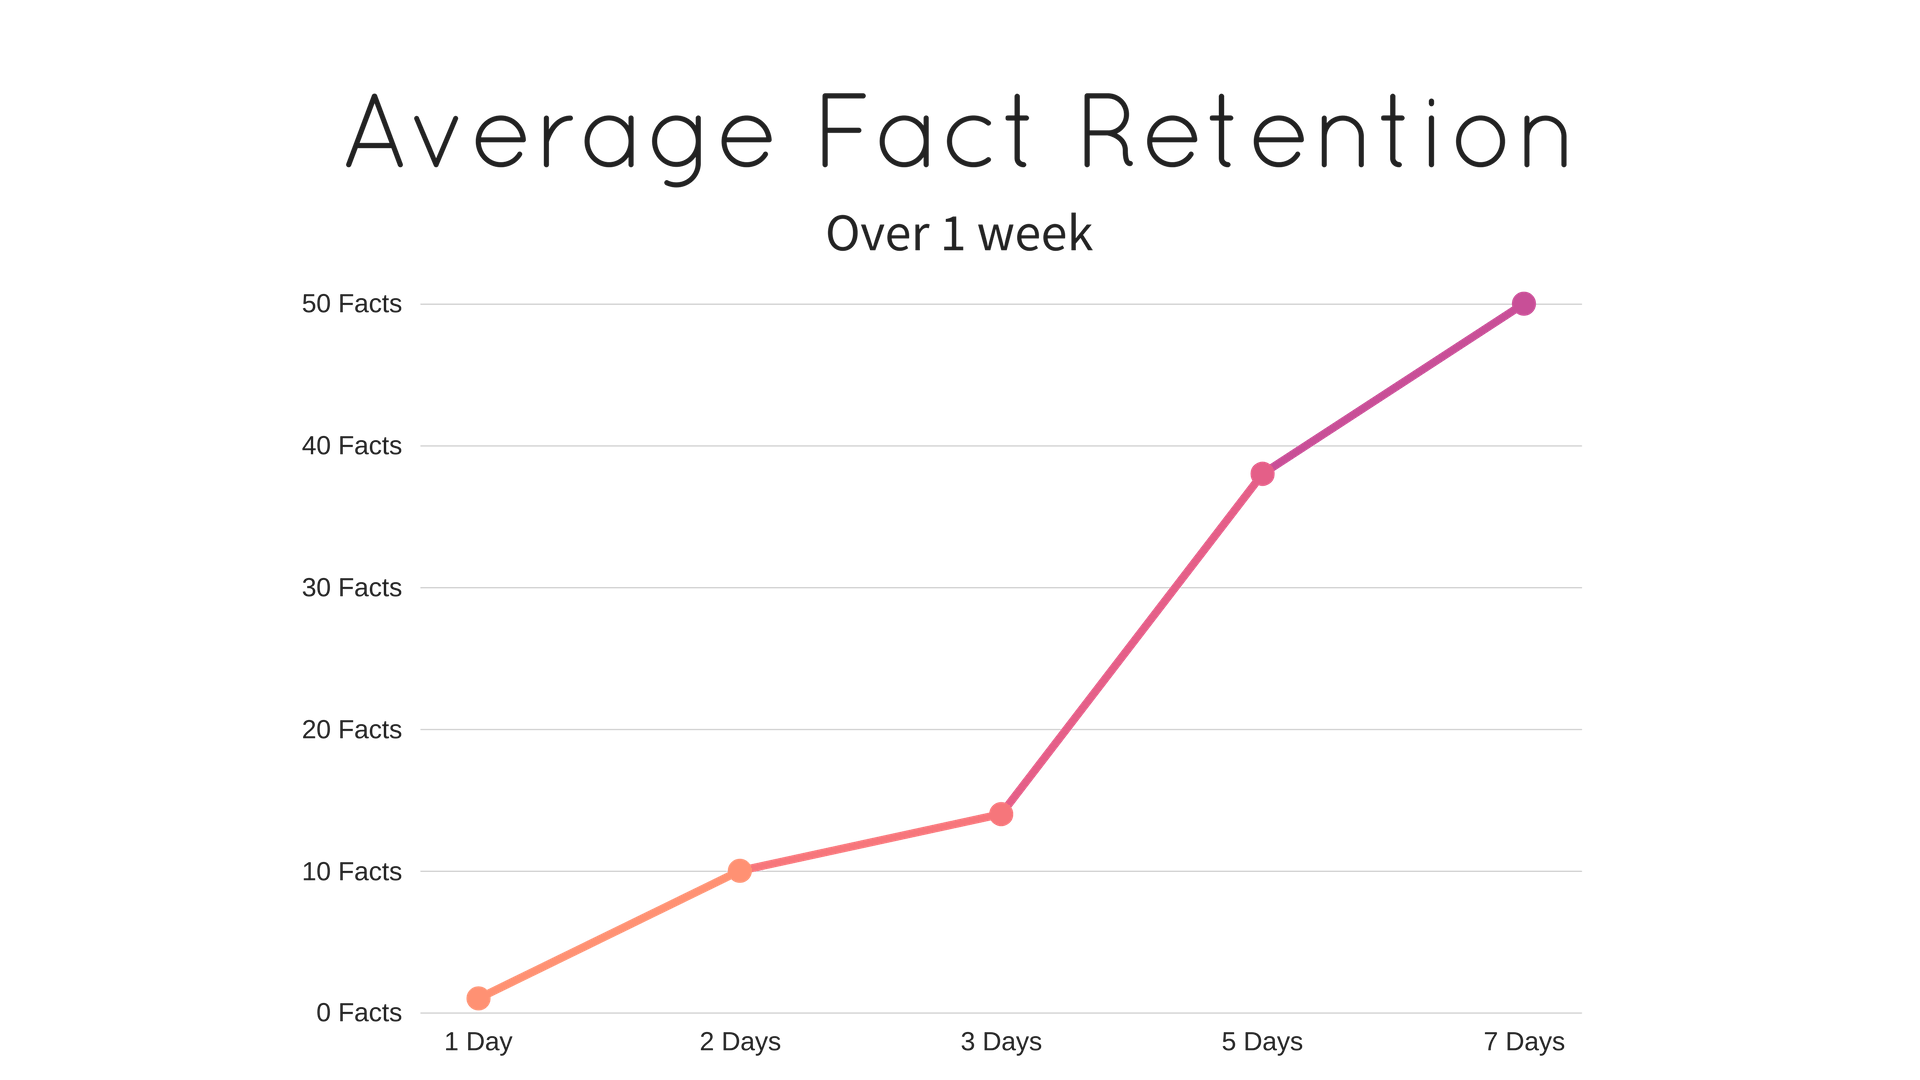 retention-graph-fact